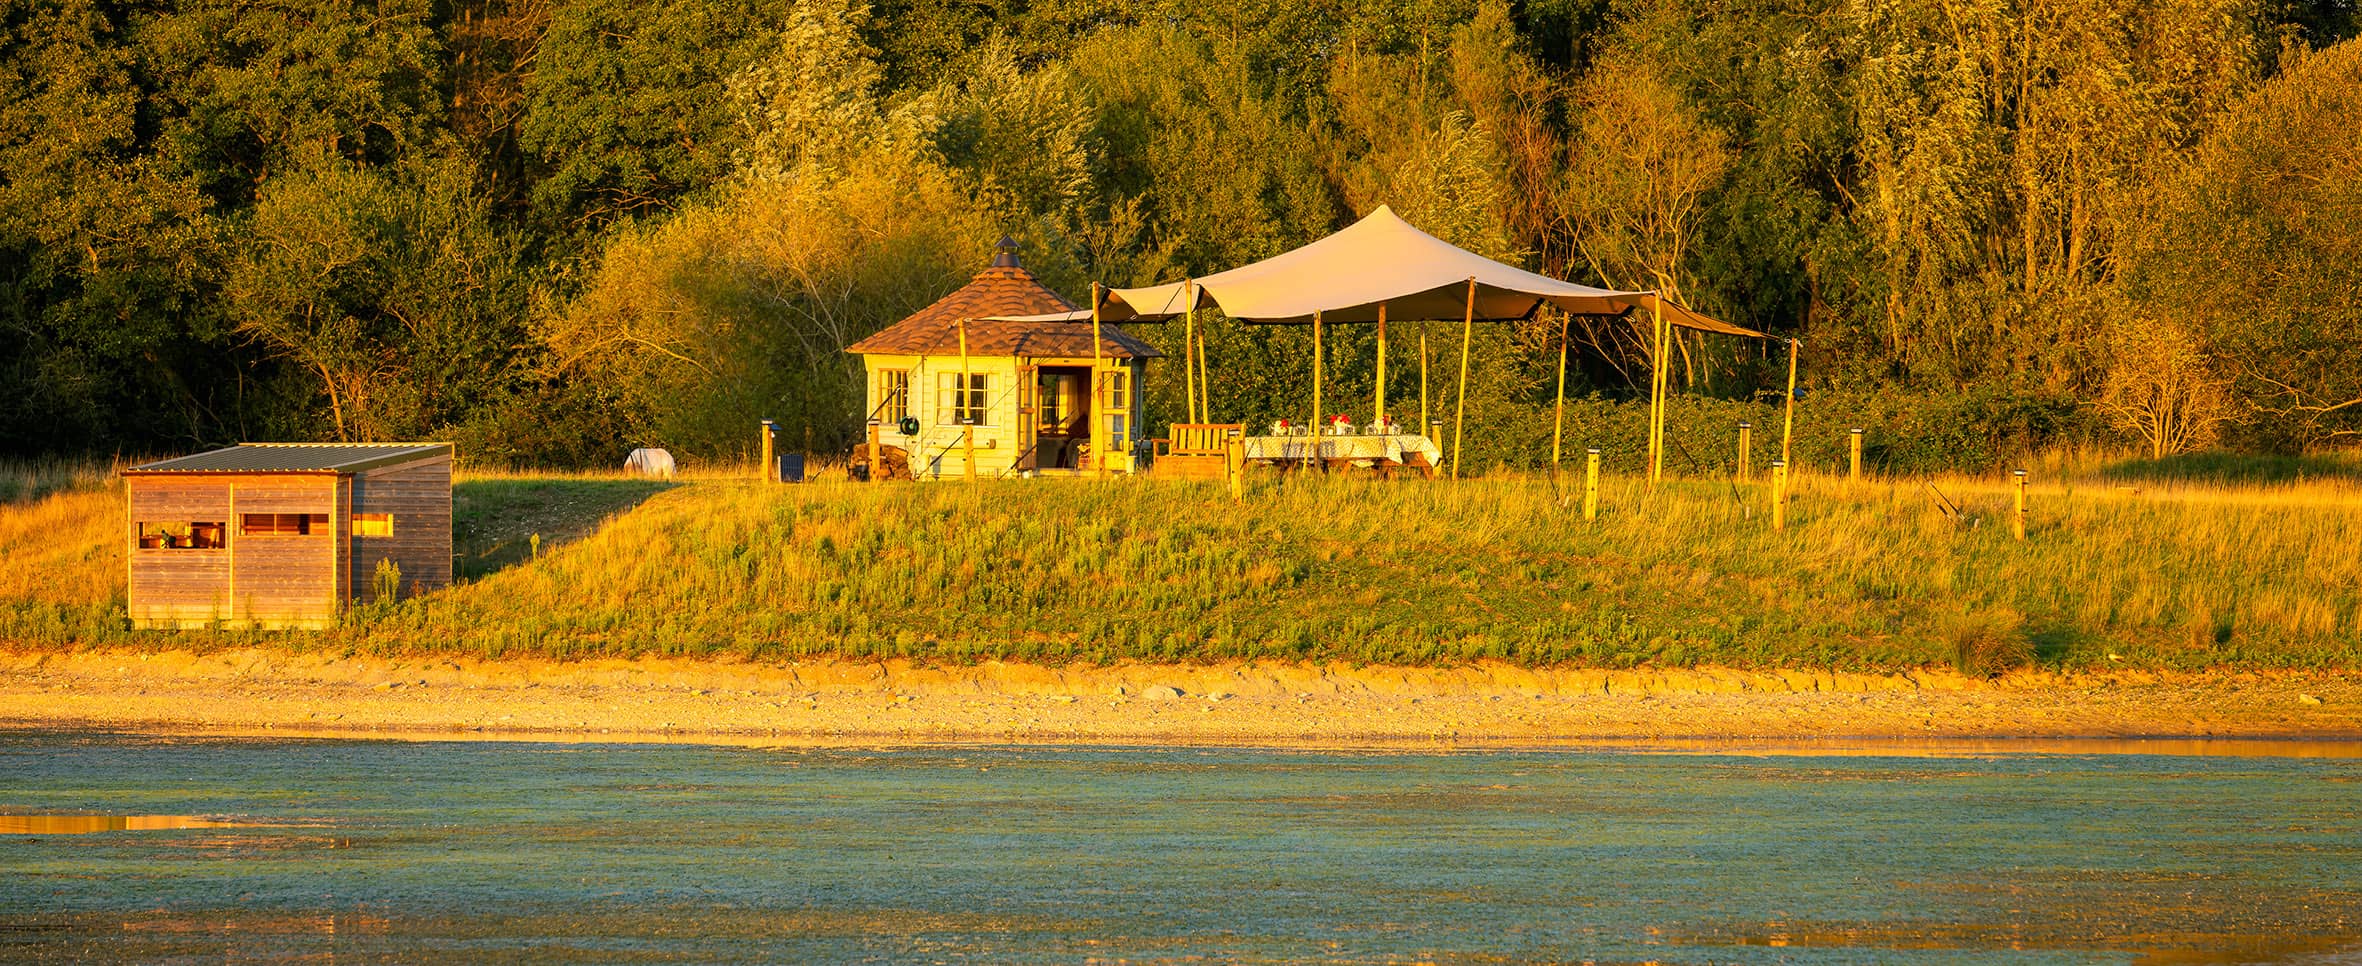 Watatunga BBQ hut beside the lake